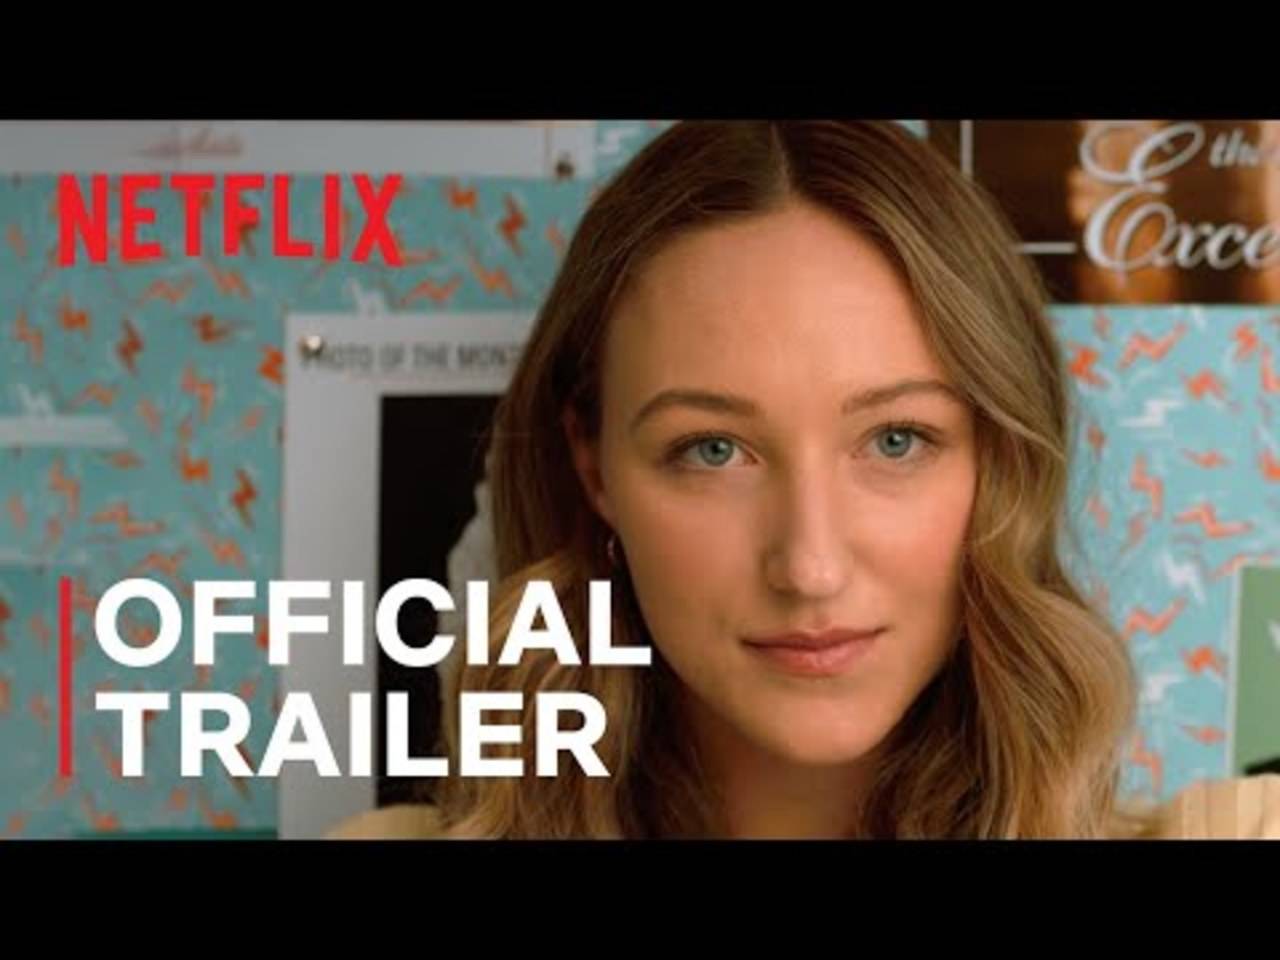 Tall Girl 3 Trailer (2022) Netflix, Release Date, Sequel, Cast, Review,  Ending, Recap,Ava Michelle - video Dailymotion